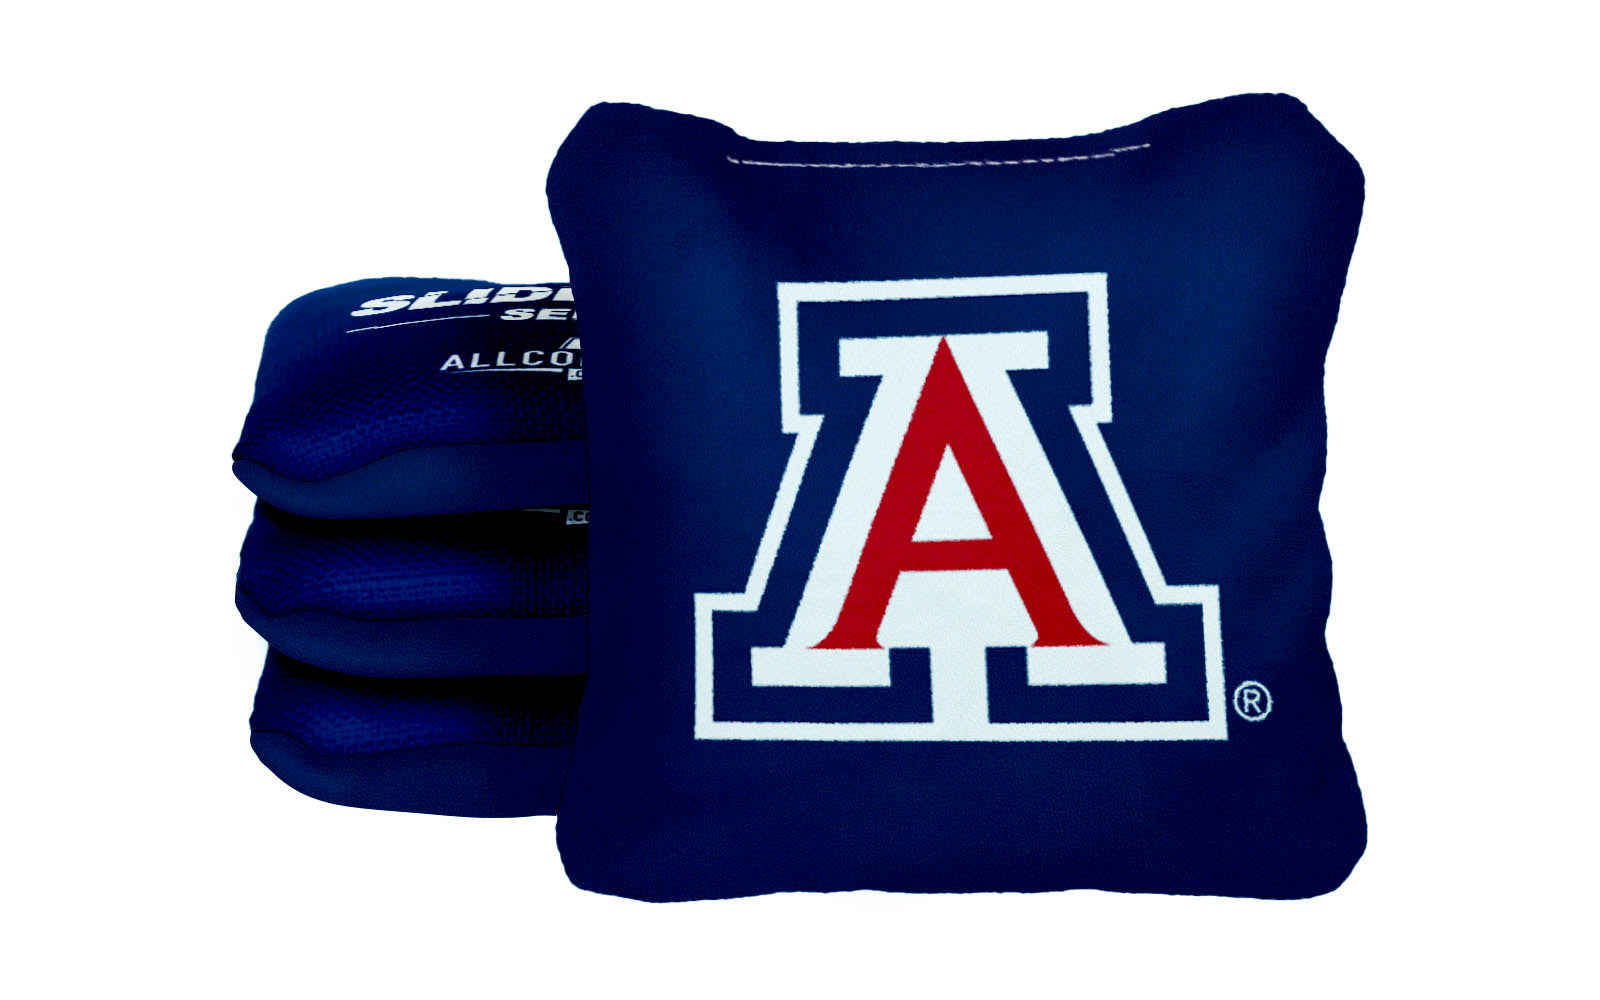 Officially Licensed Collegiate Cornhole Bags - Slide Rite - Set of 4 - University of Arizona